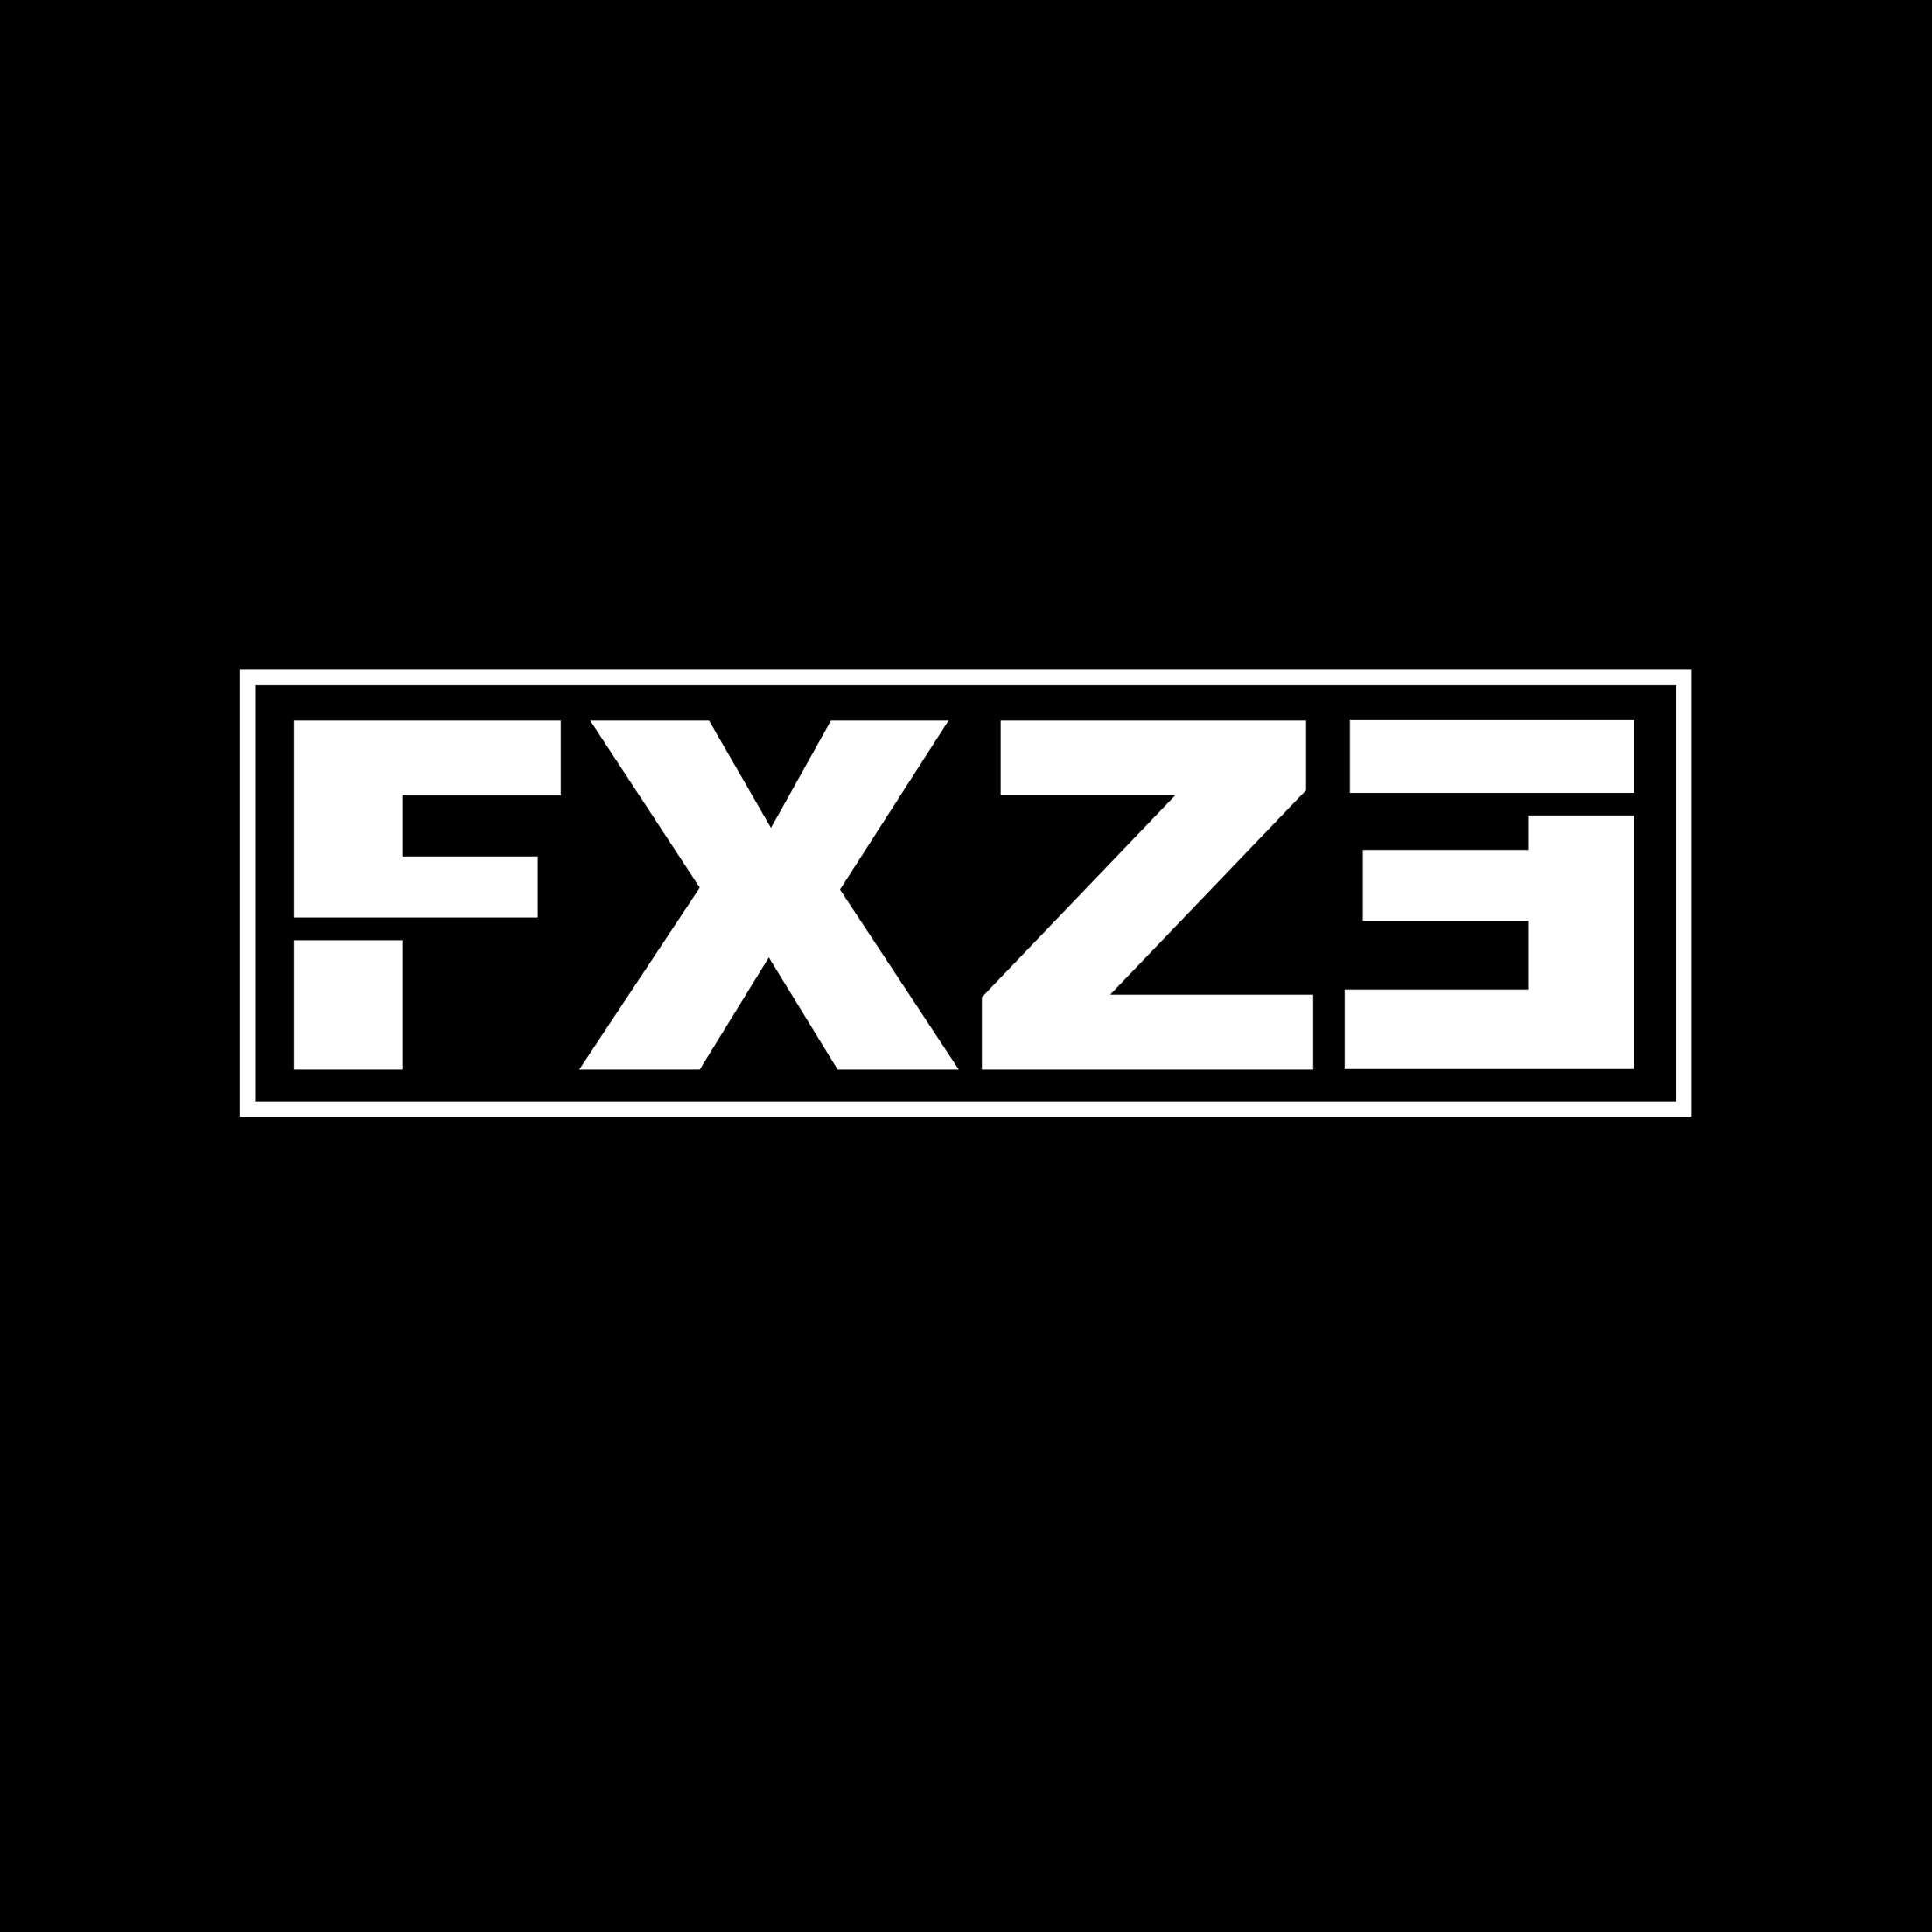 DJ FXZE's profile image